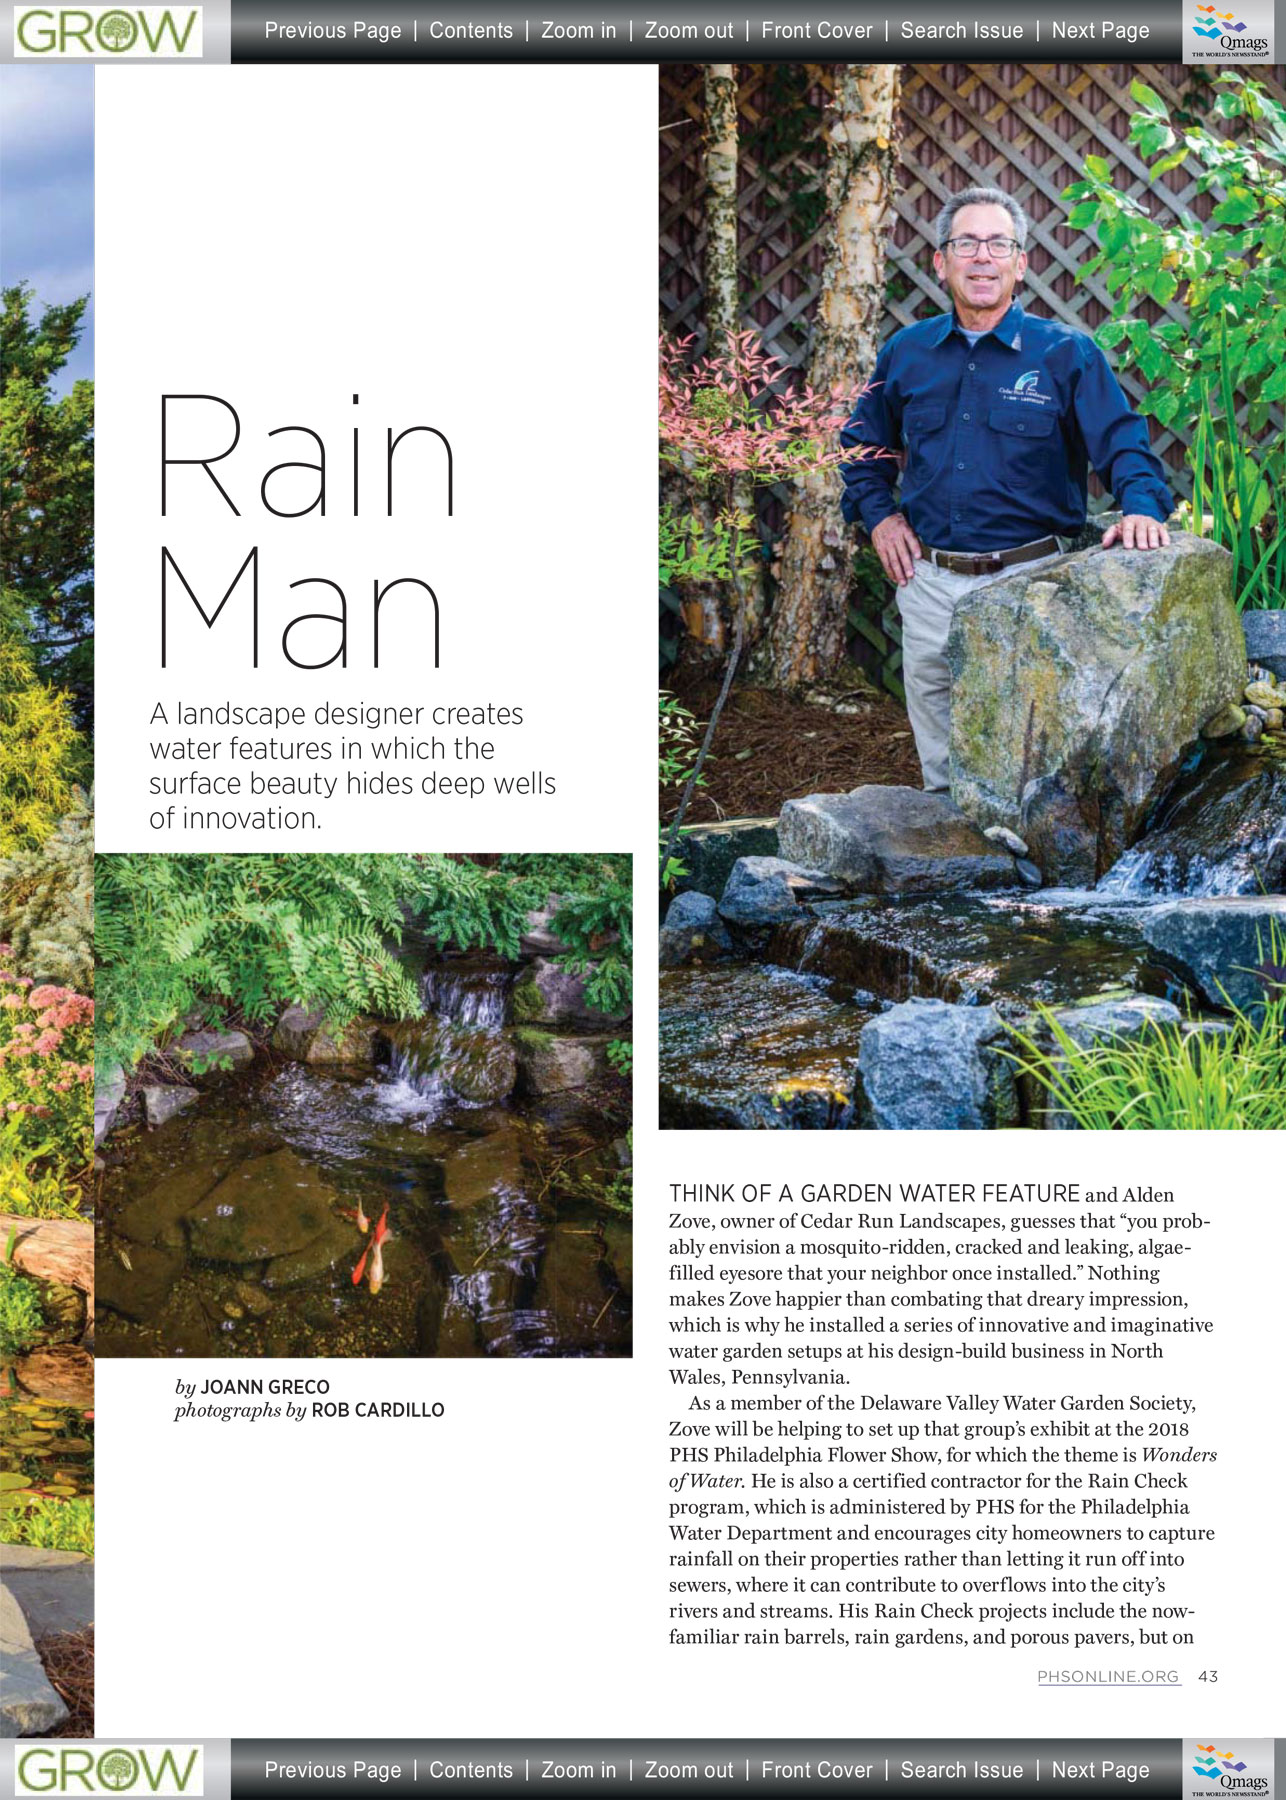 The Rain Guy in Grow Magazine Article